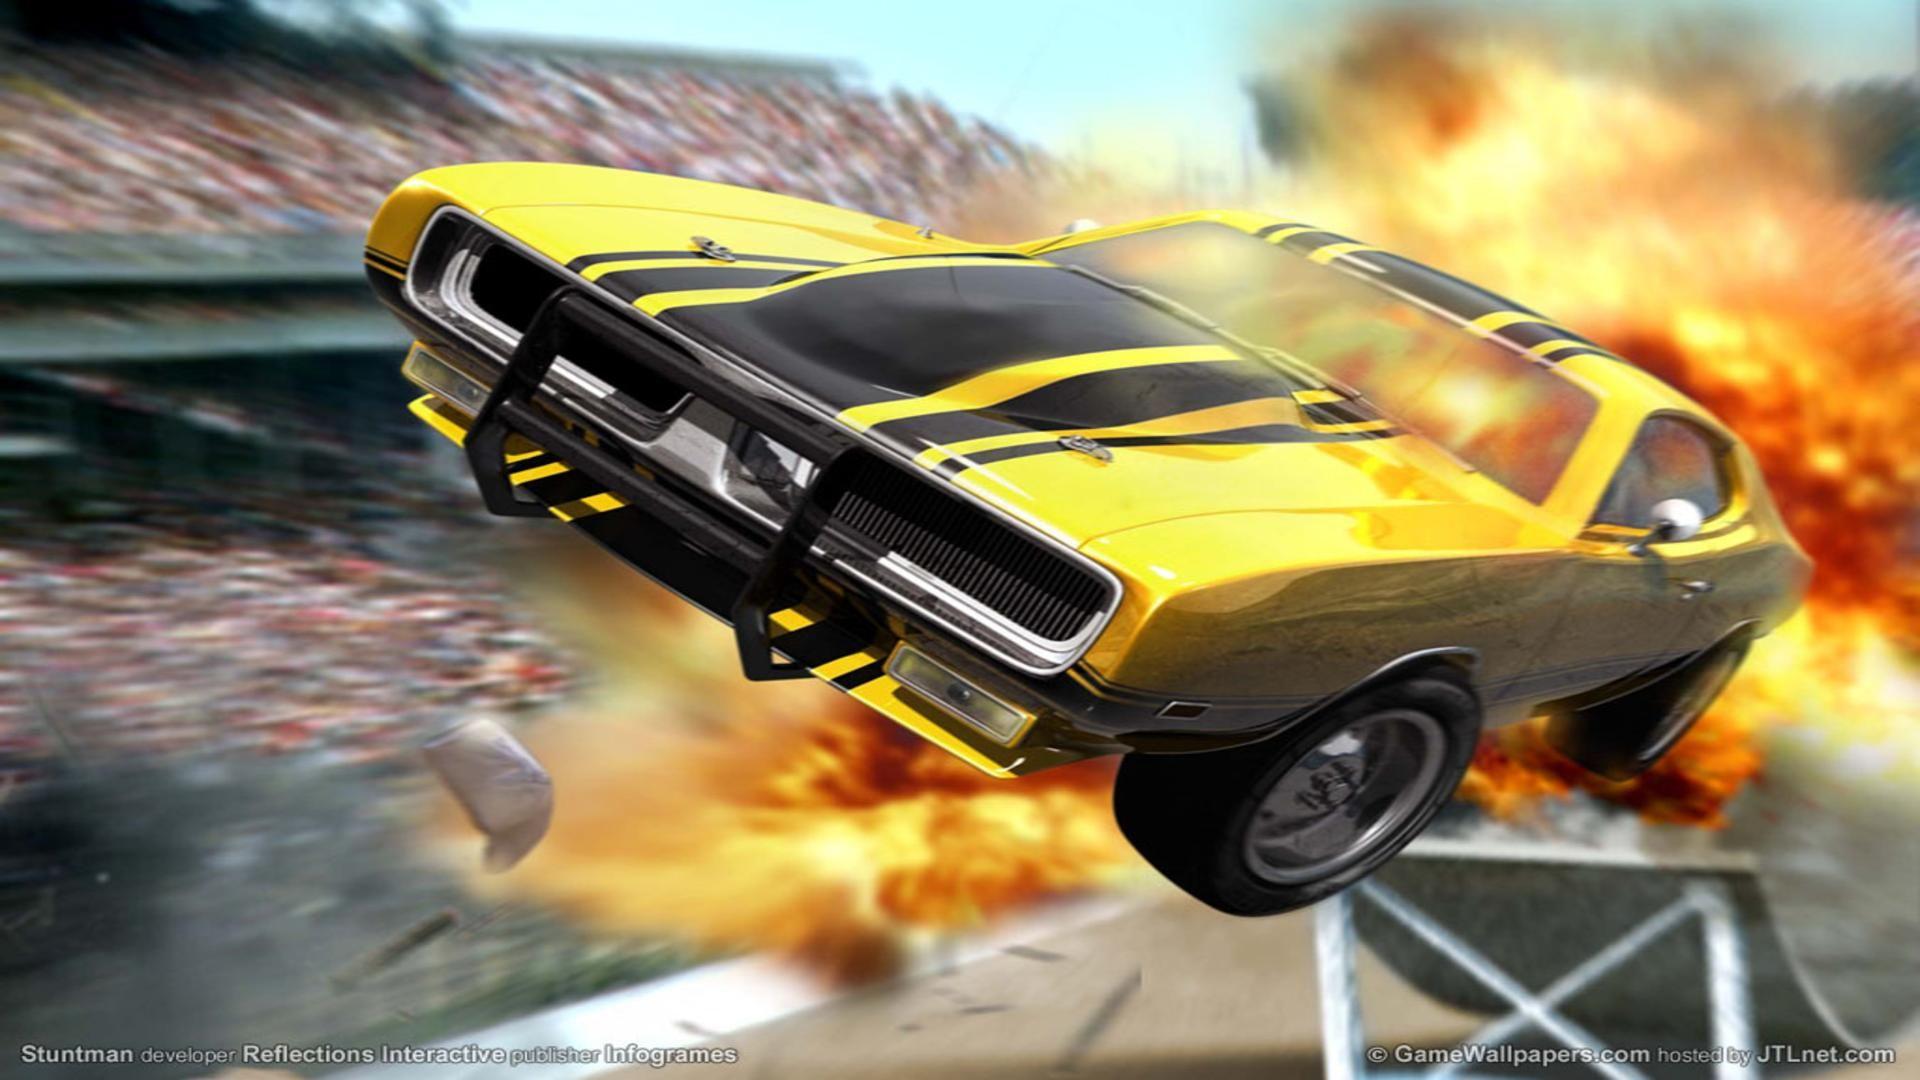 Stunt man wallpaper in car action poster free desktop background